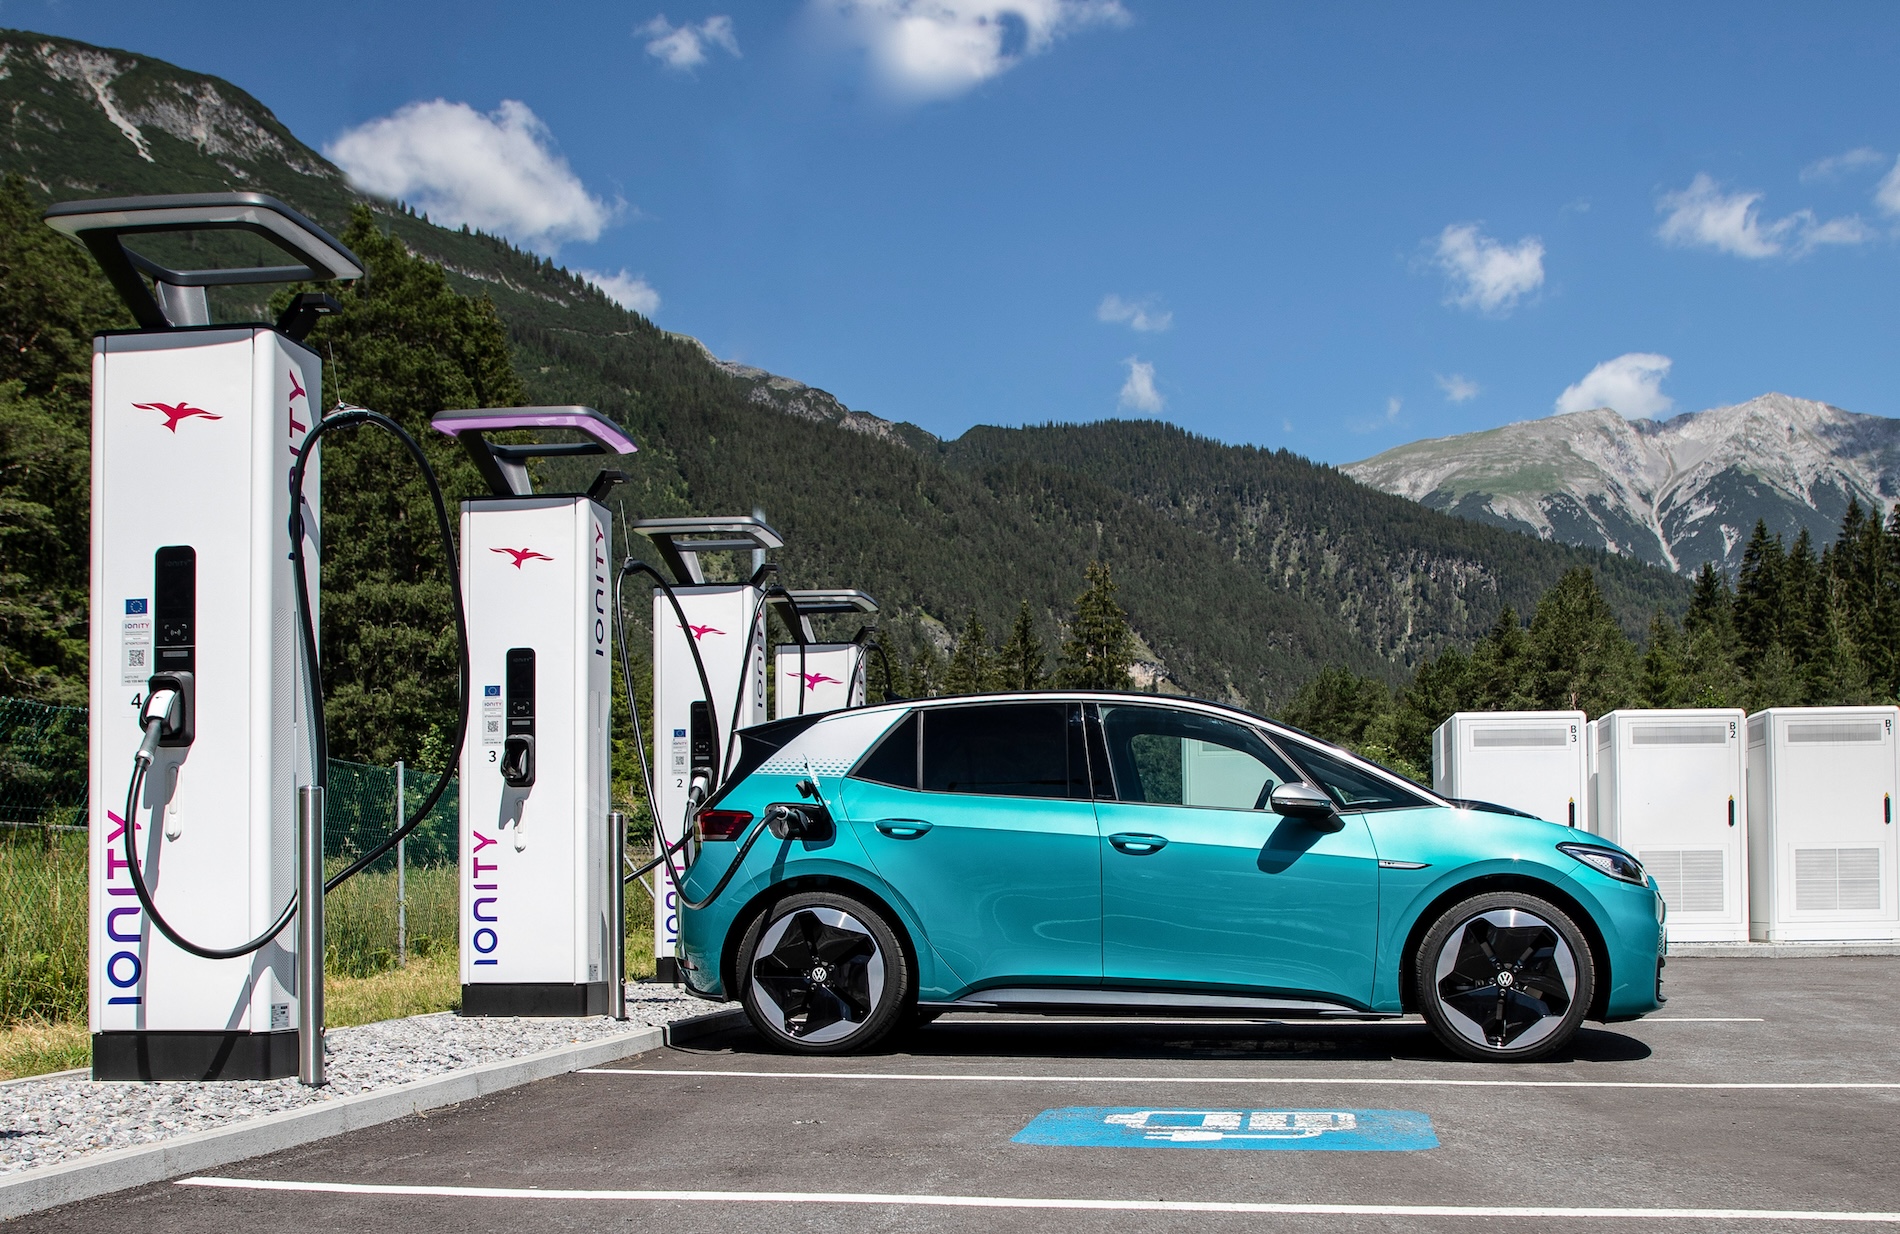 "Elli Drive Plus" – New charging tariff to kick off holiday season in Europe